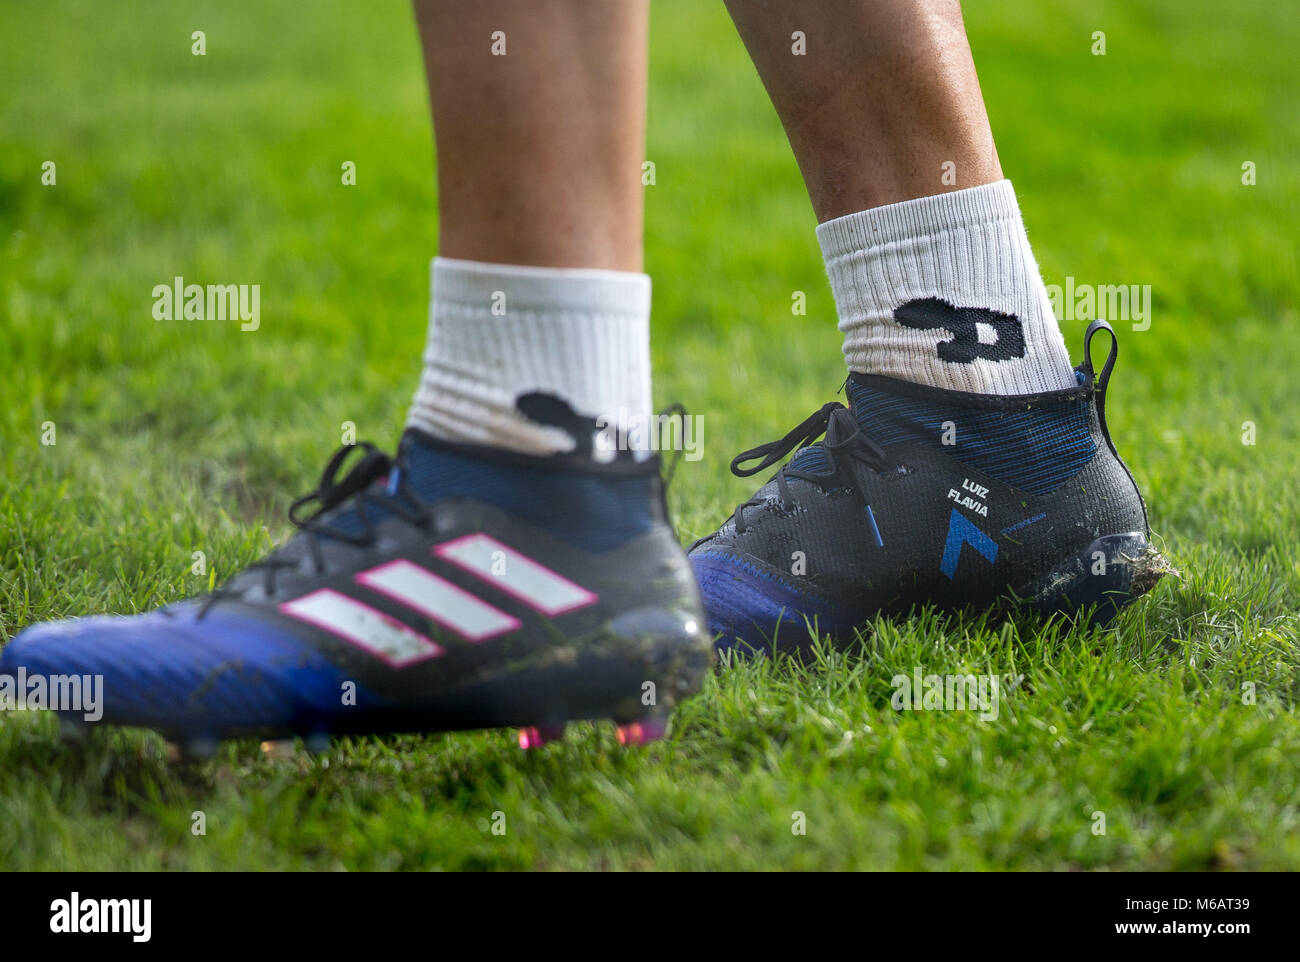 adidas personalised football boots